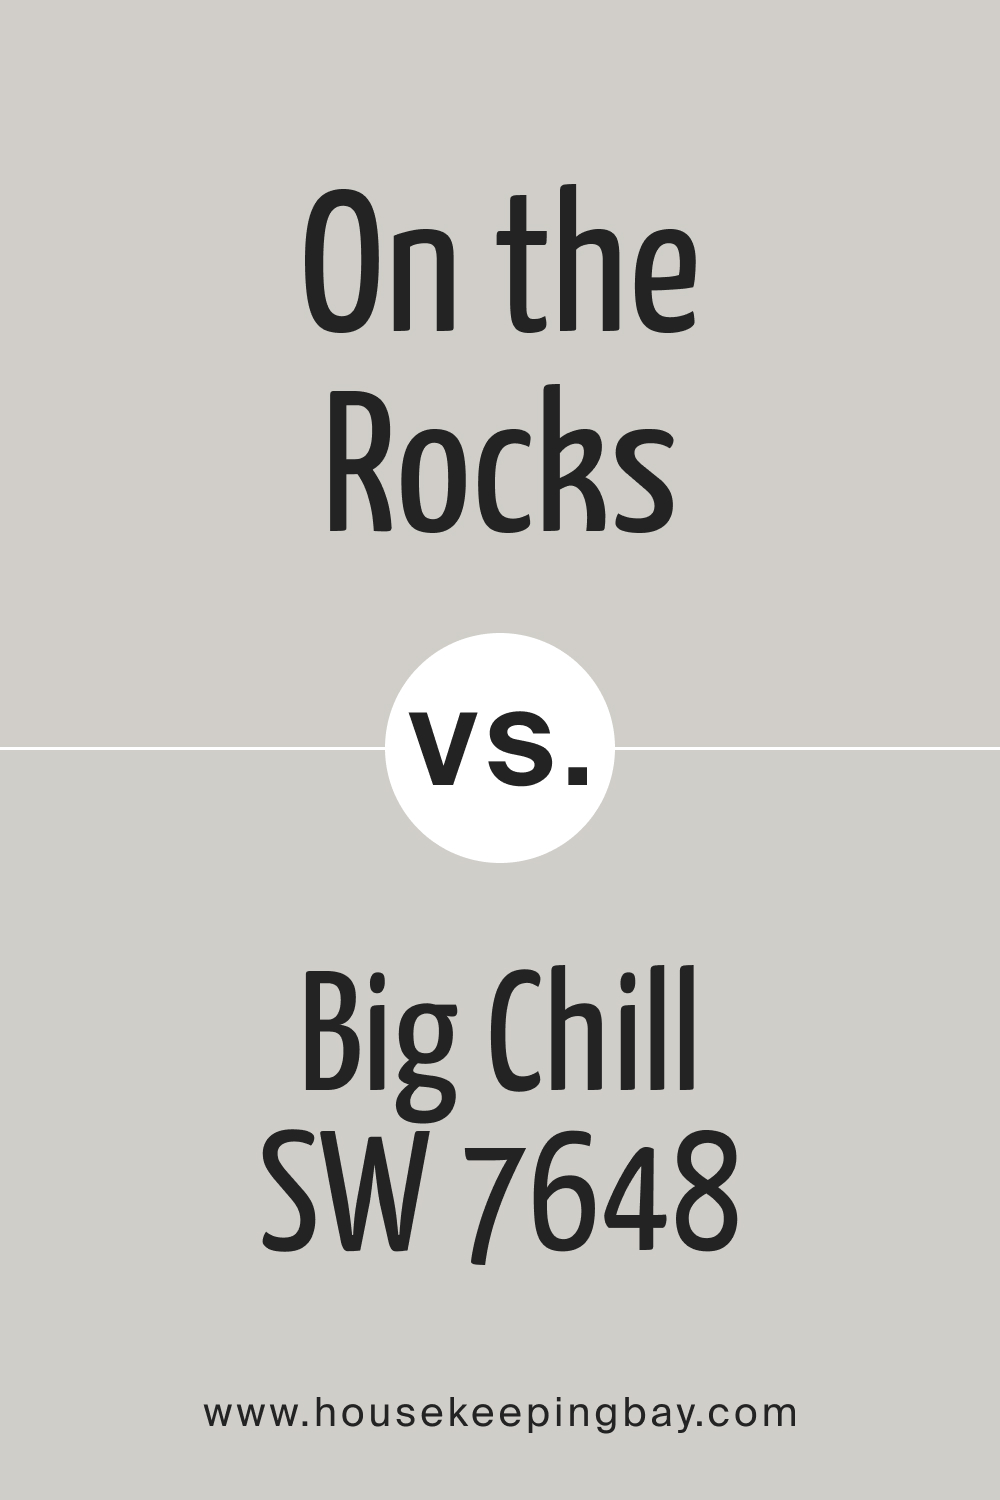 On the Rocks SW 7671 vs Big Chill SW 7648